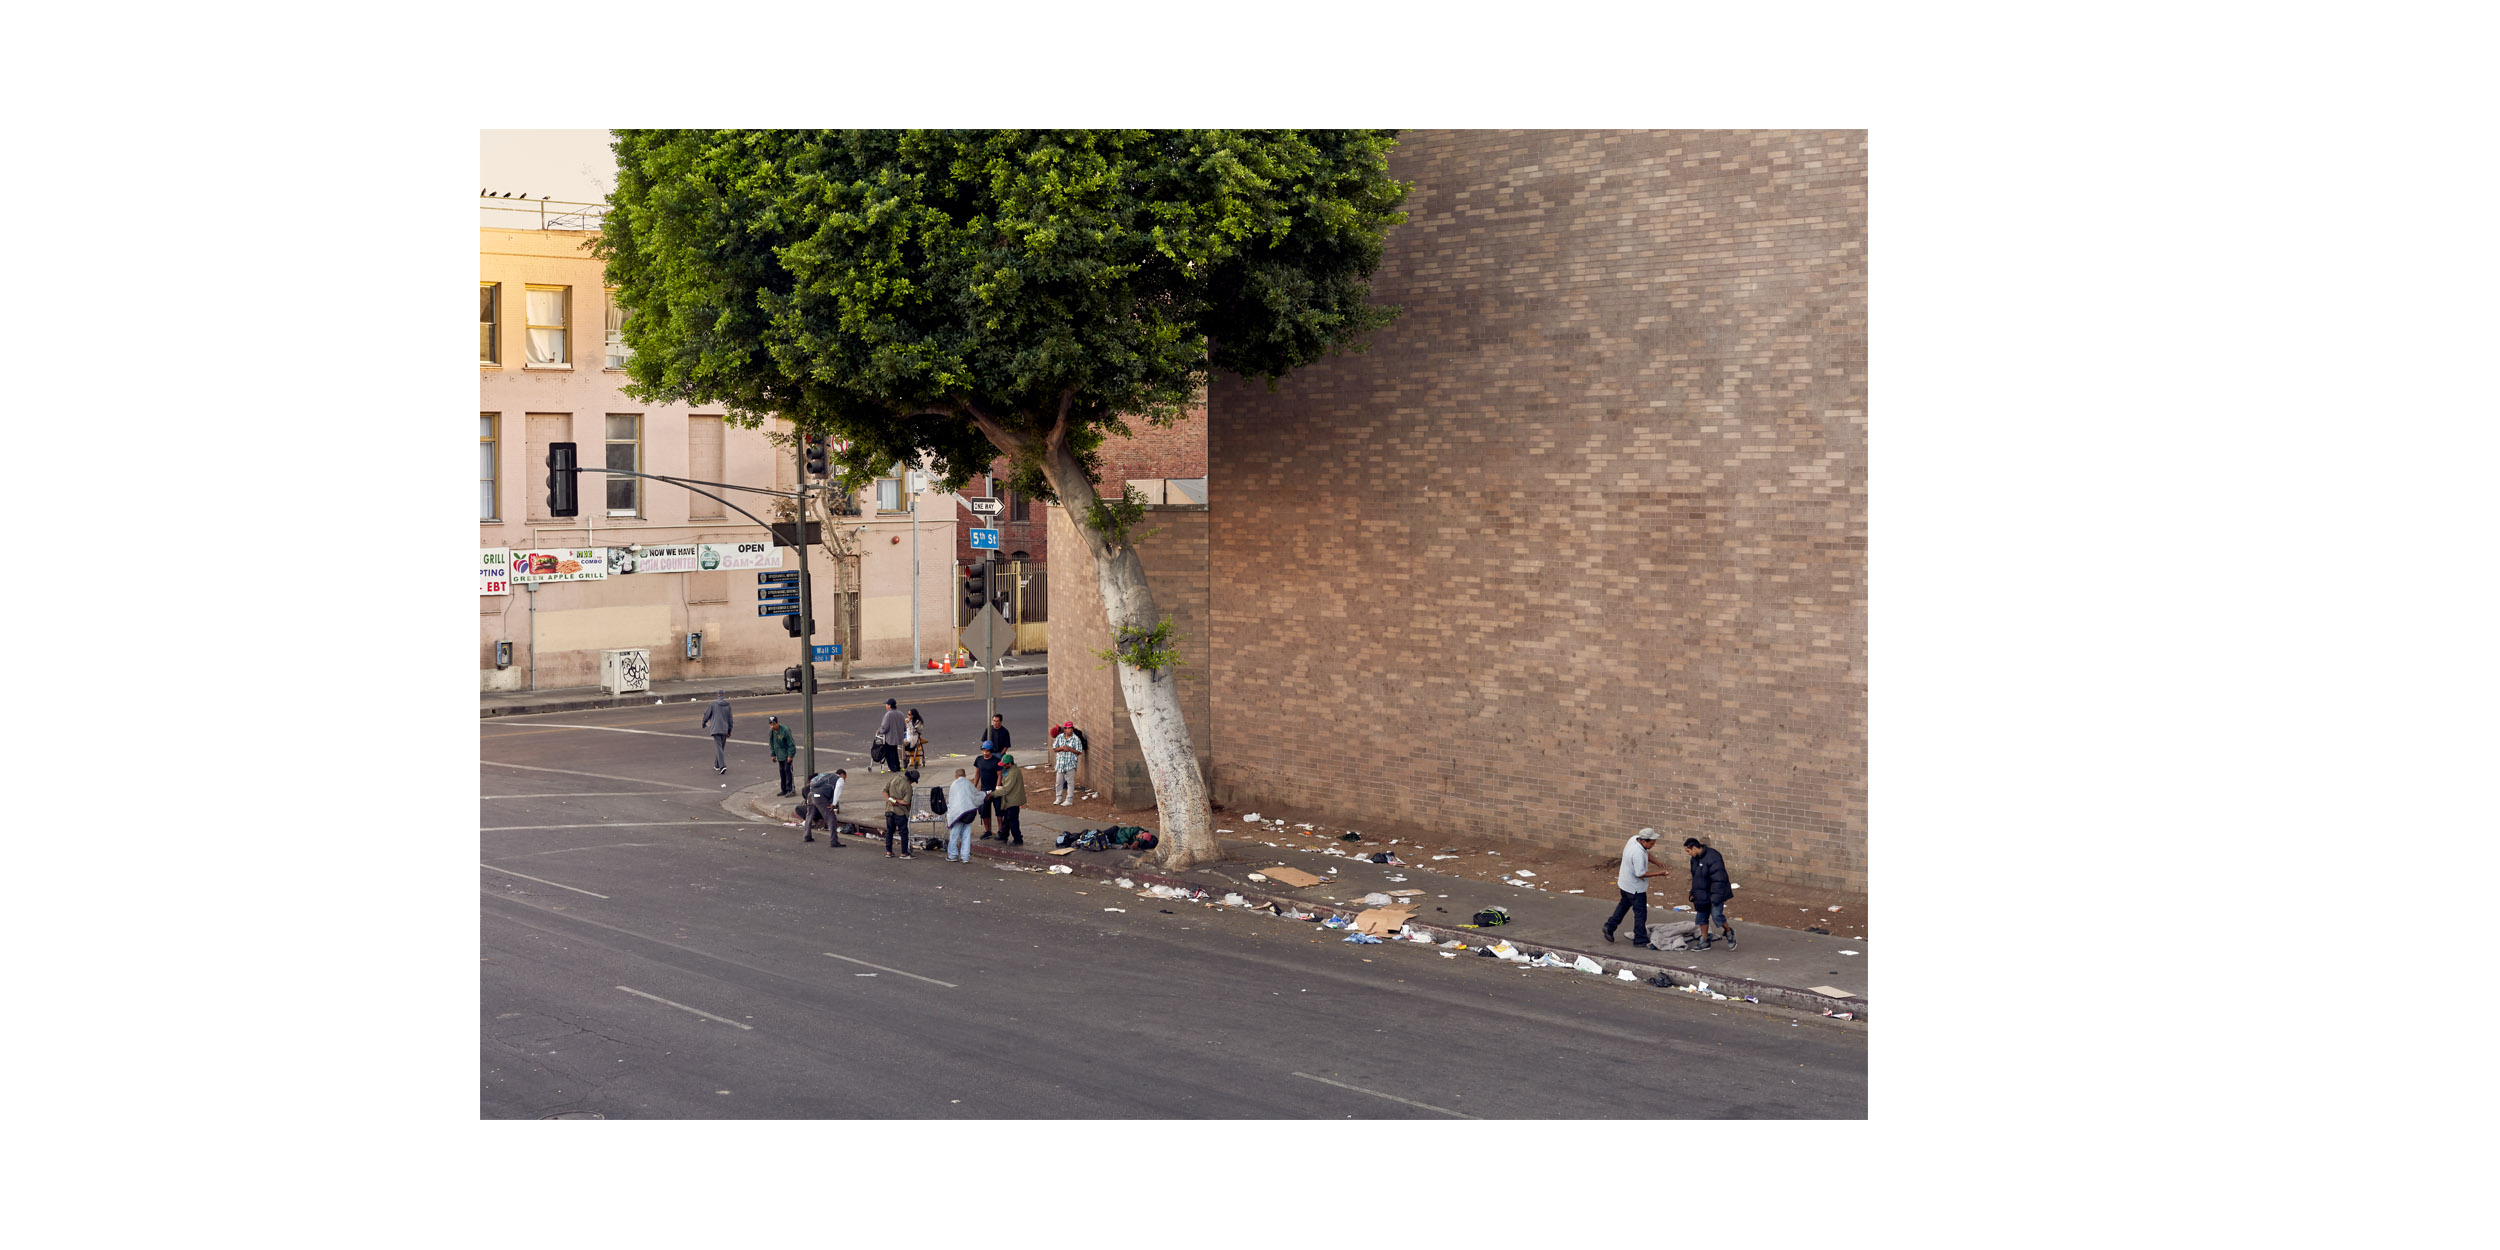  Homelessness in LA – SOCIETY (FR) 